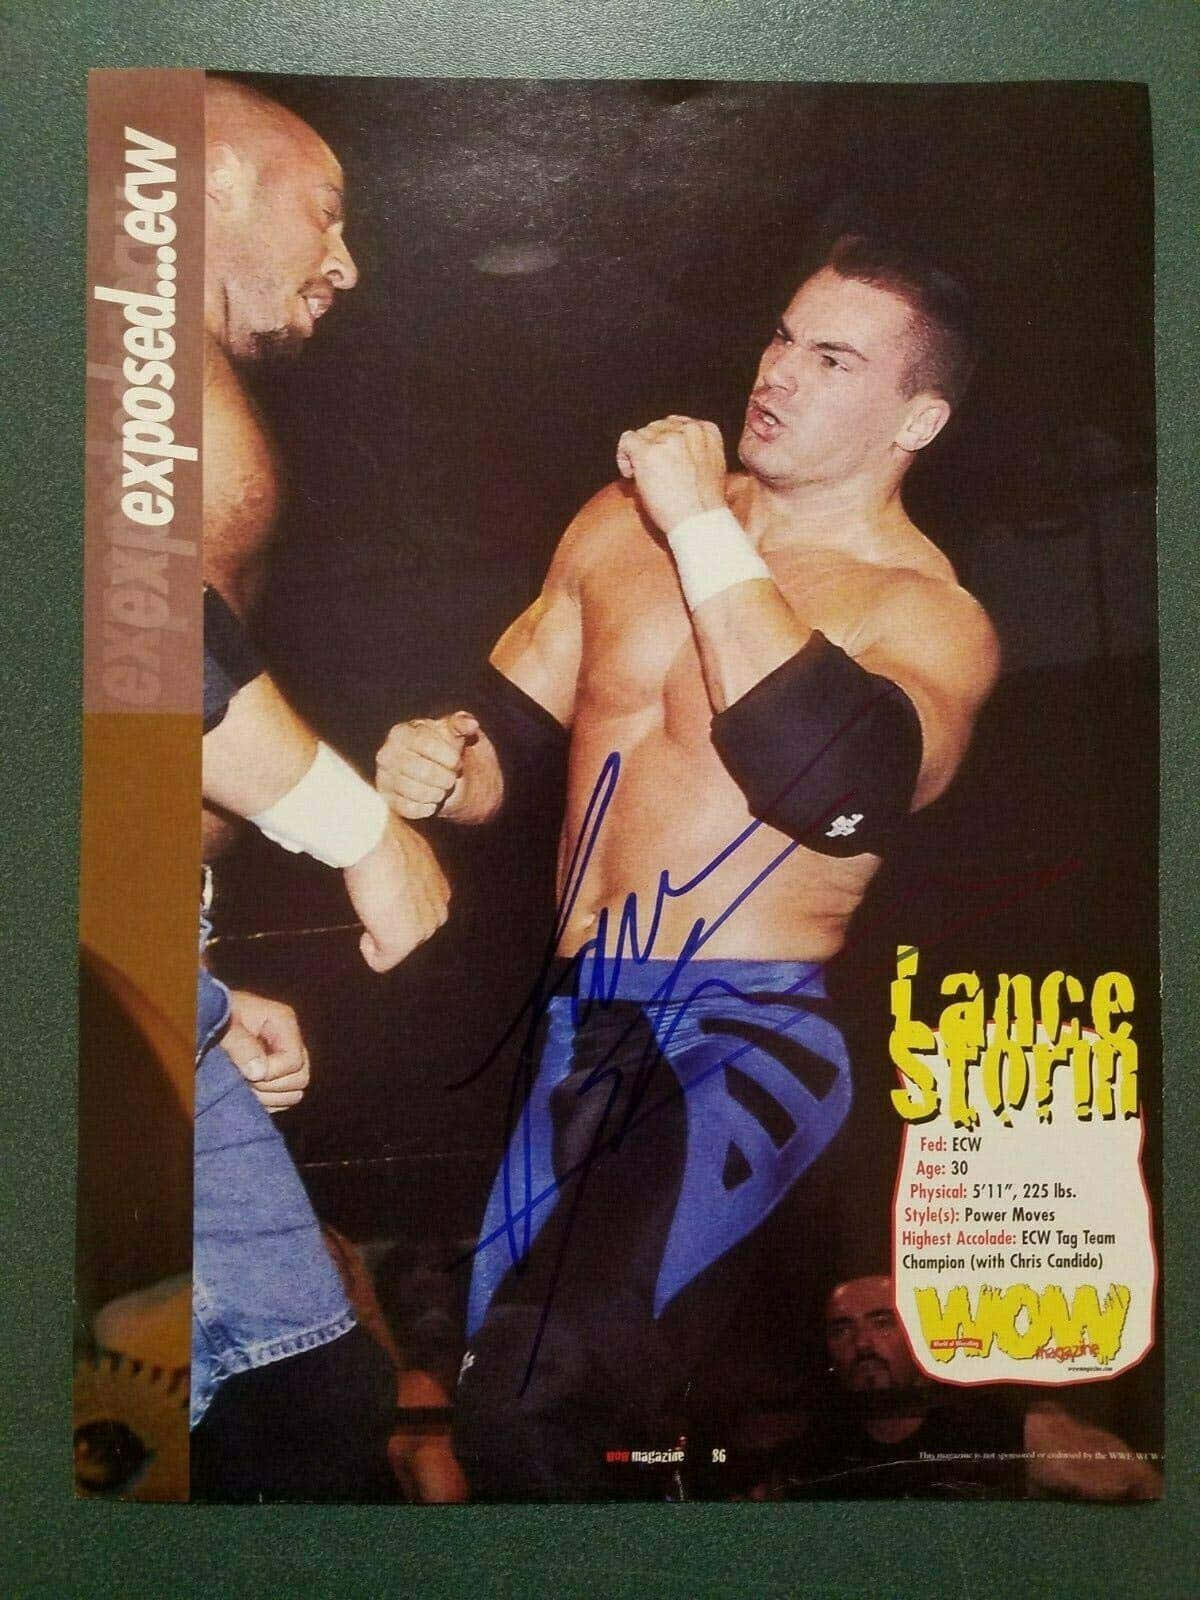 Handsome Photographed Canadian Professional Wrestler Lance Storm Wallpaper